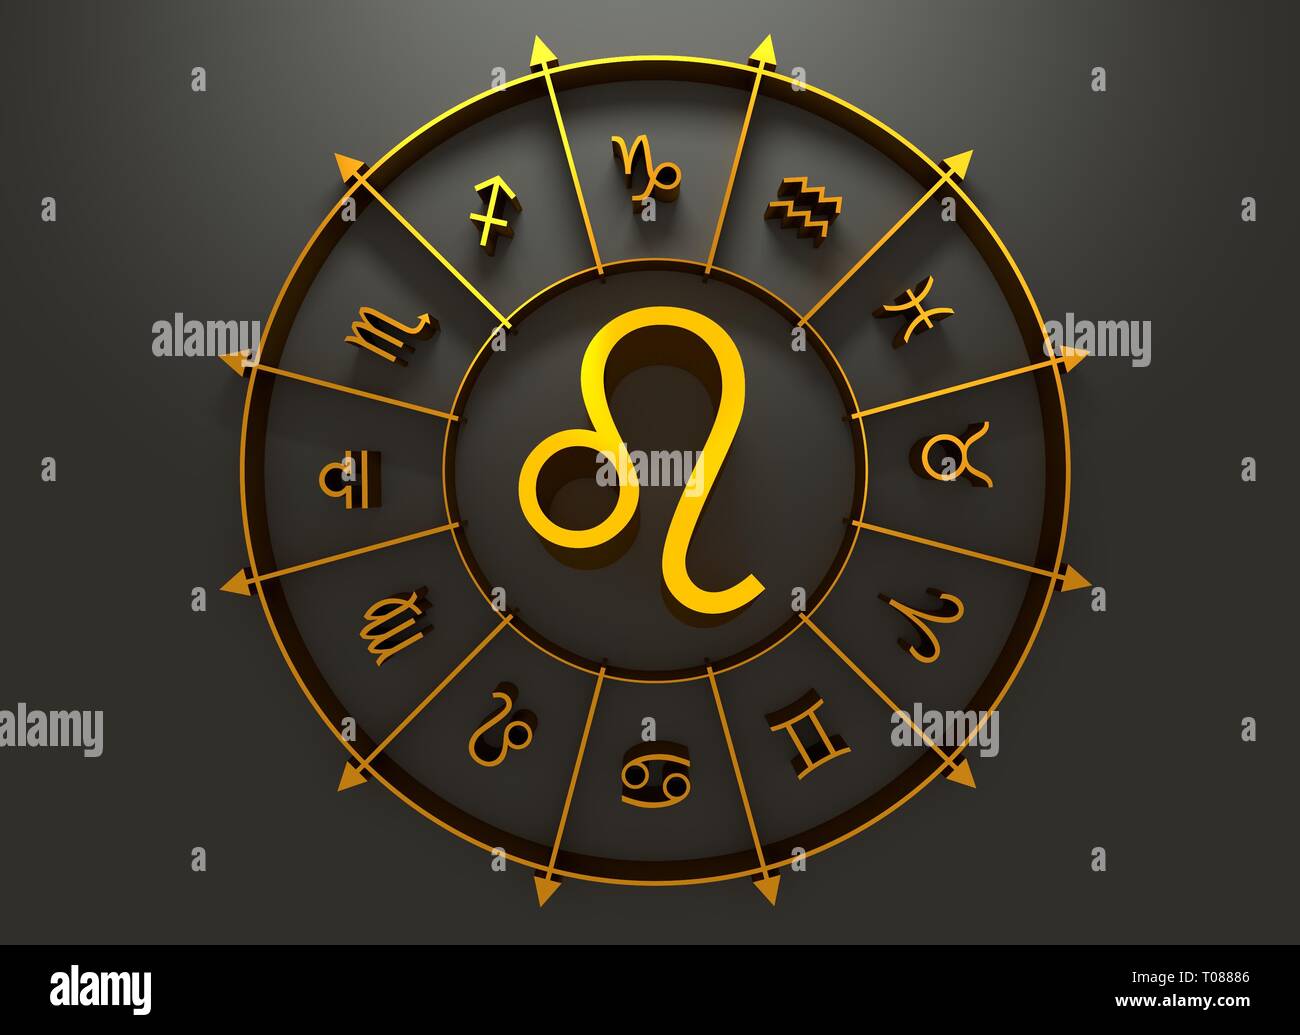 Astrology symbol leo Stock Photo - Alamy